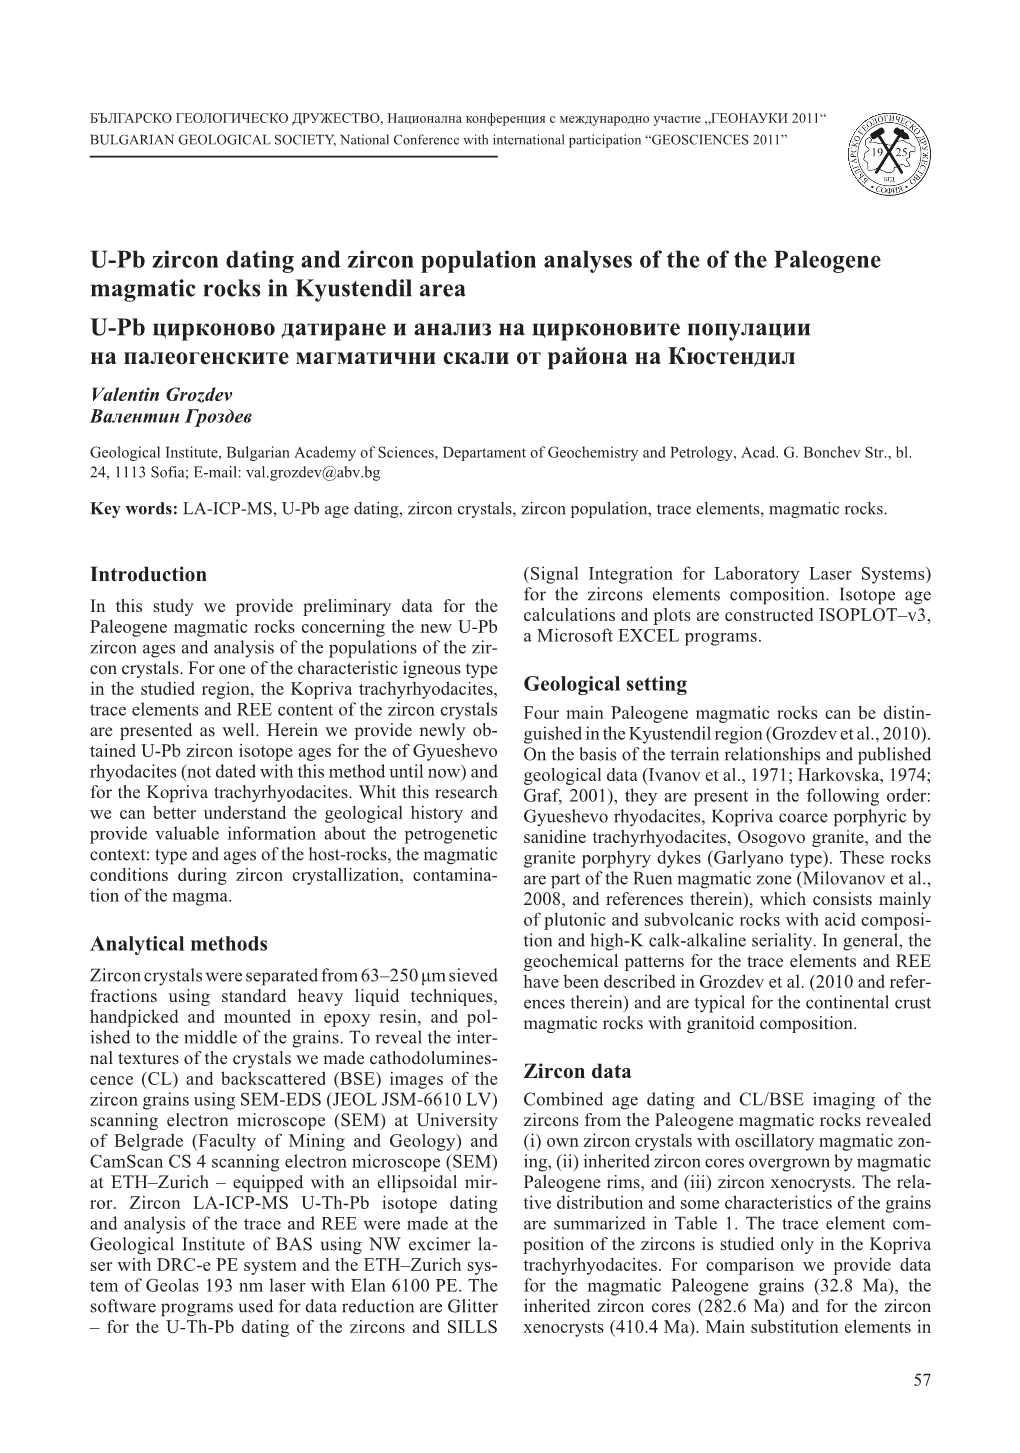 U-Pb Zircon Dating and Zircon Population Analyses of the of The